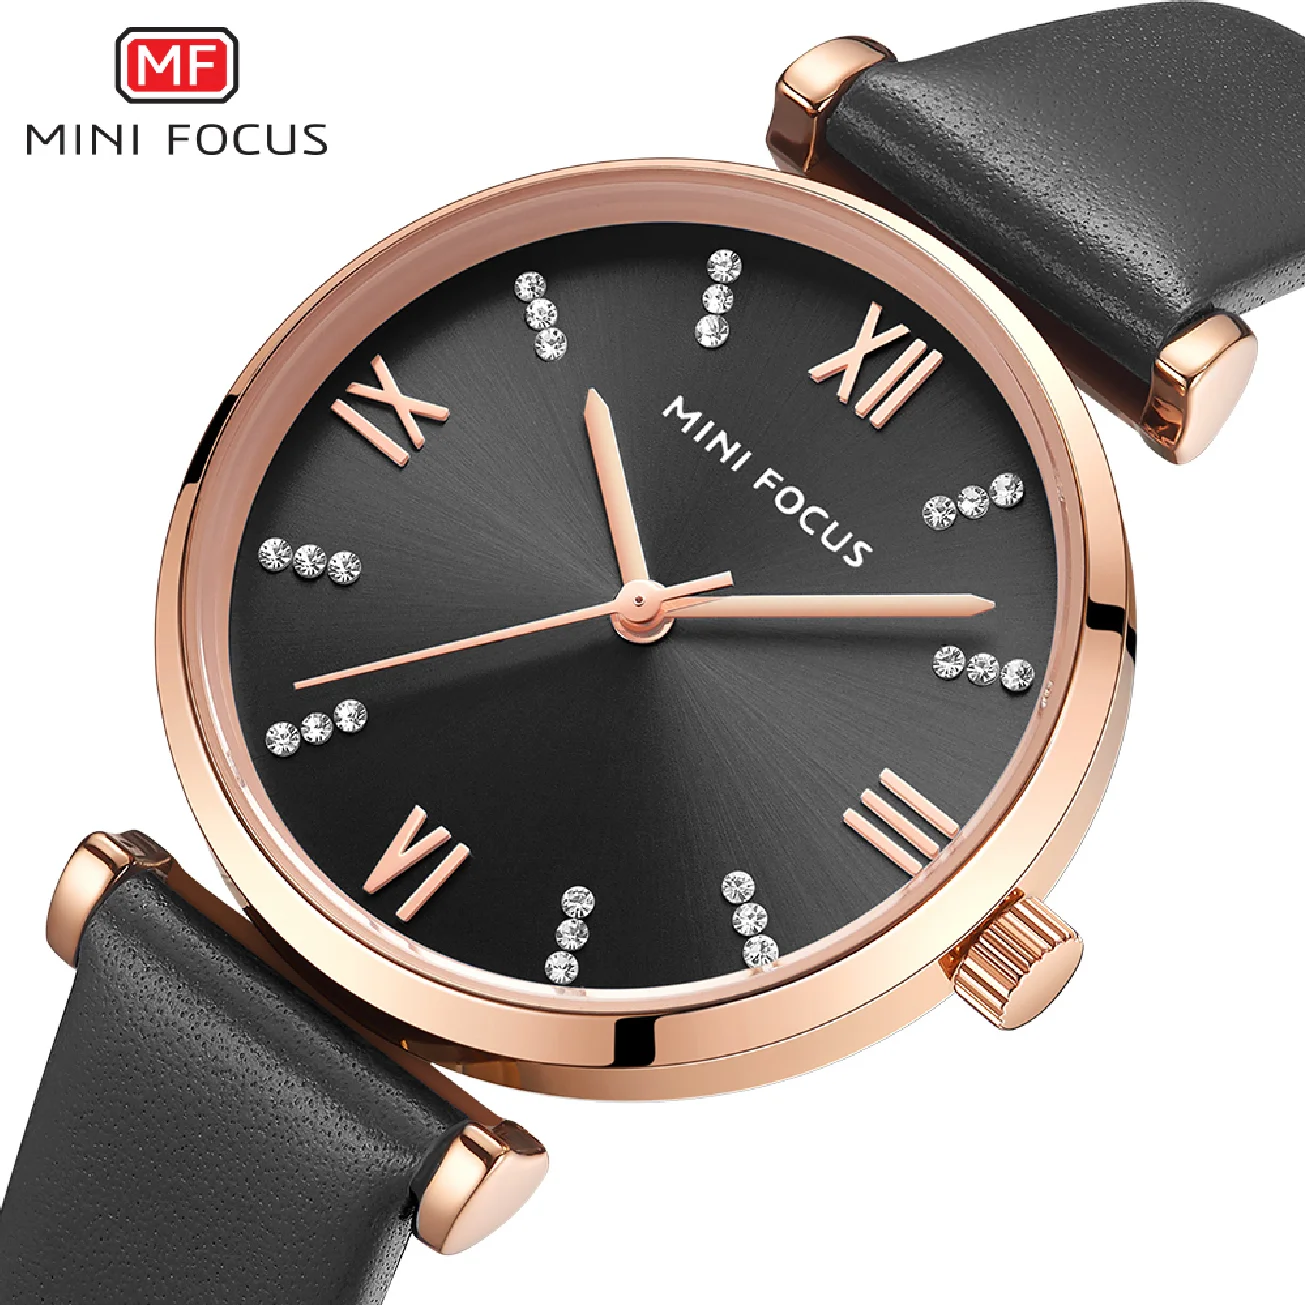 Enlarge MINI FOCUS New Watches Women Luxury Fashion Ladies Waterproof Watch Black Leather Casual Female Clock Women's Gift Montre Femme